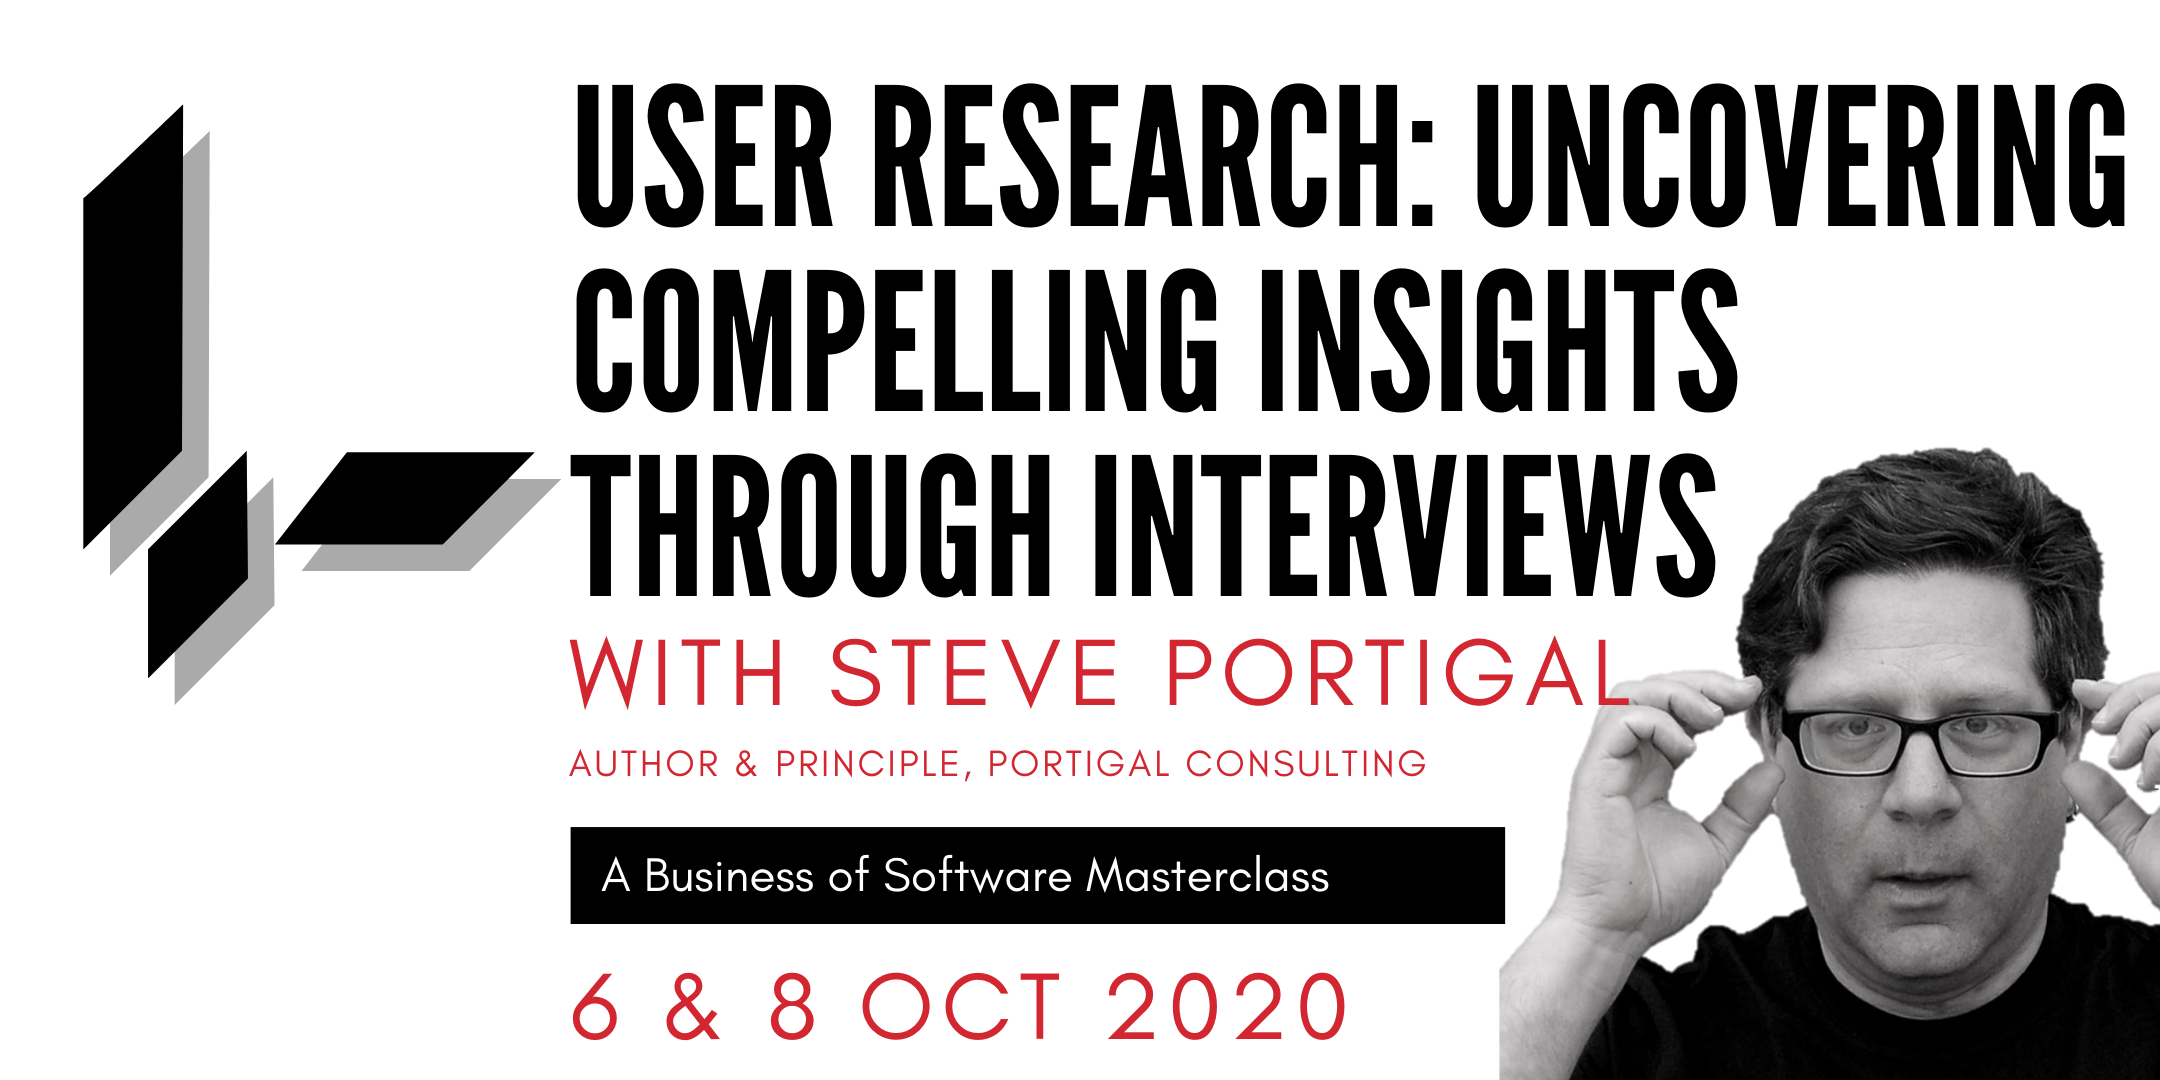 EB Steve Portigal User Research October 2020